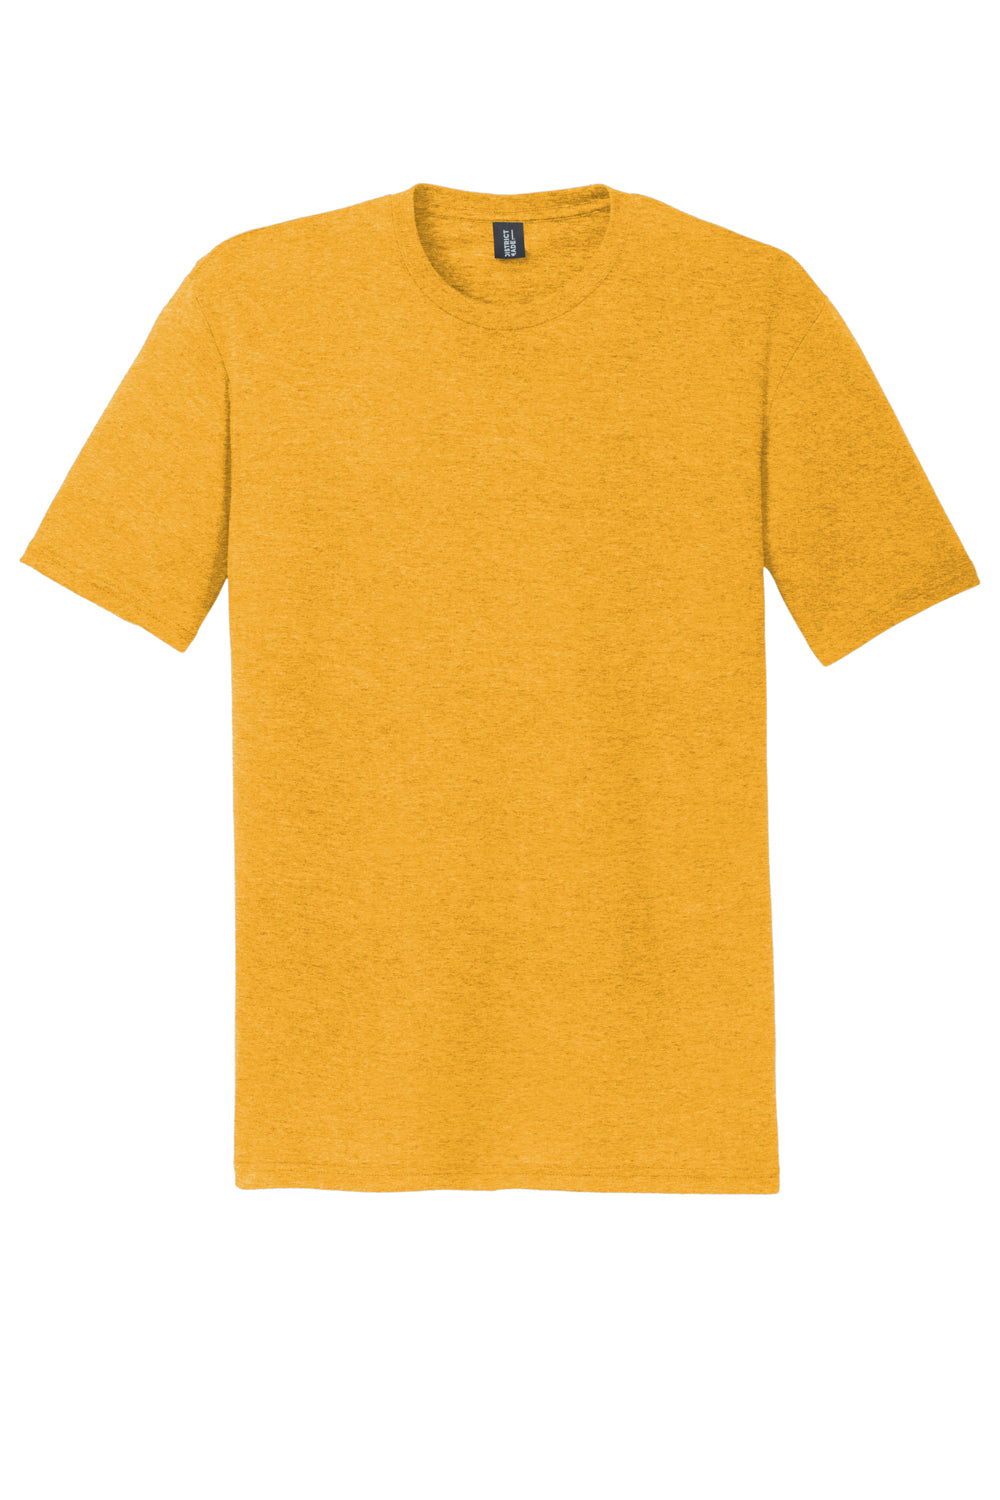 District DM130 Mens Perfect Tri Short Sleeve Crewneck T-Shirt Heather Ochre Yellow Flat Front